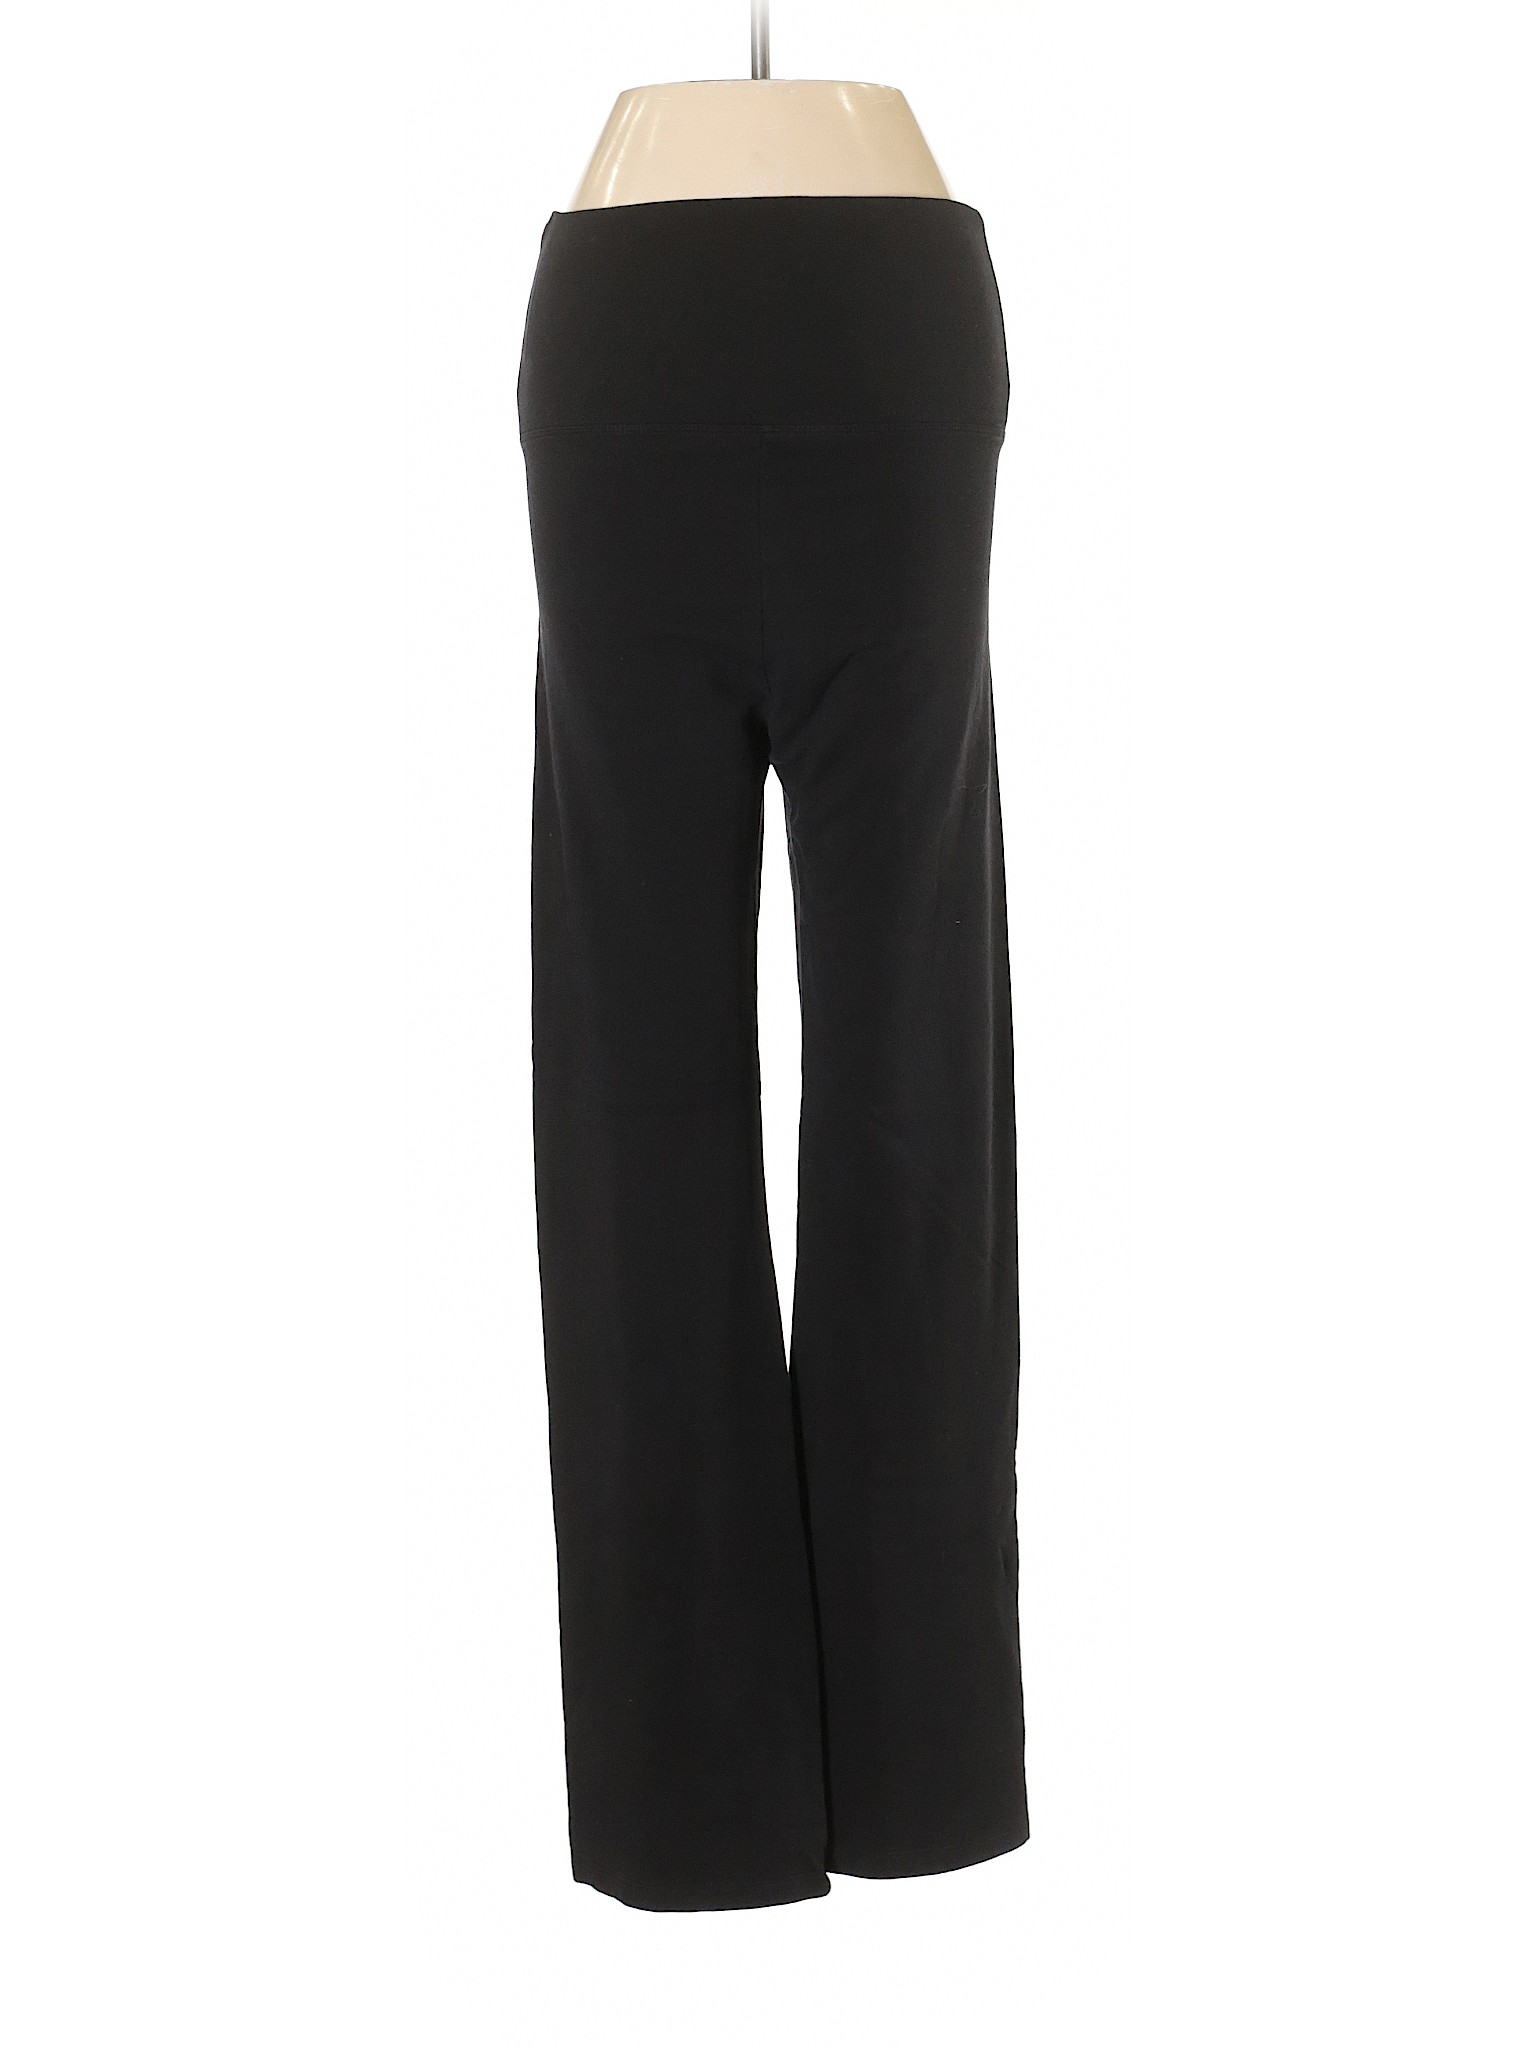 Marc New York Women Black Casual Pants S | eBay